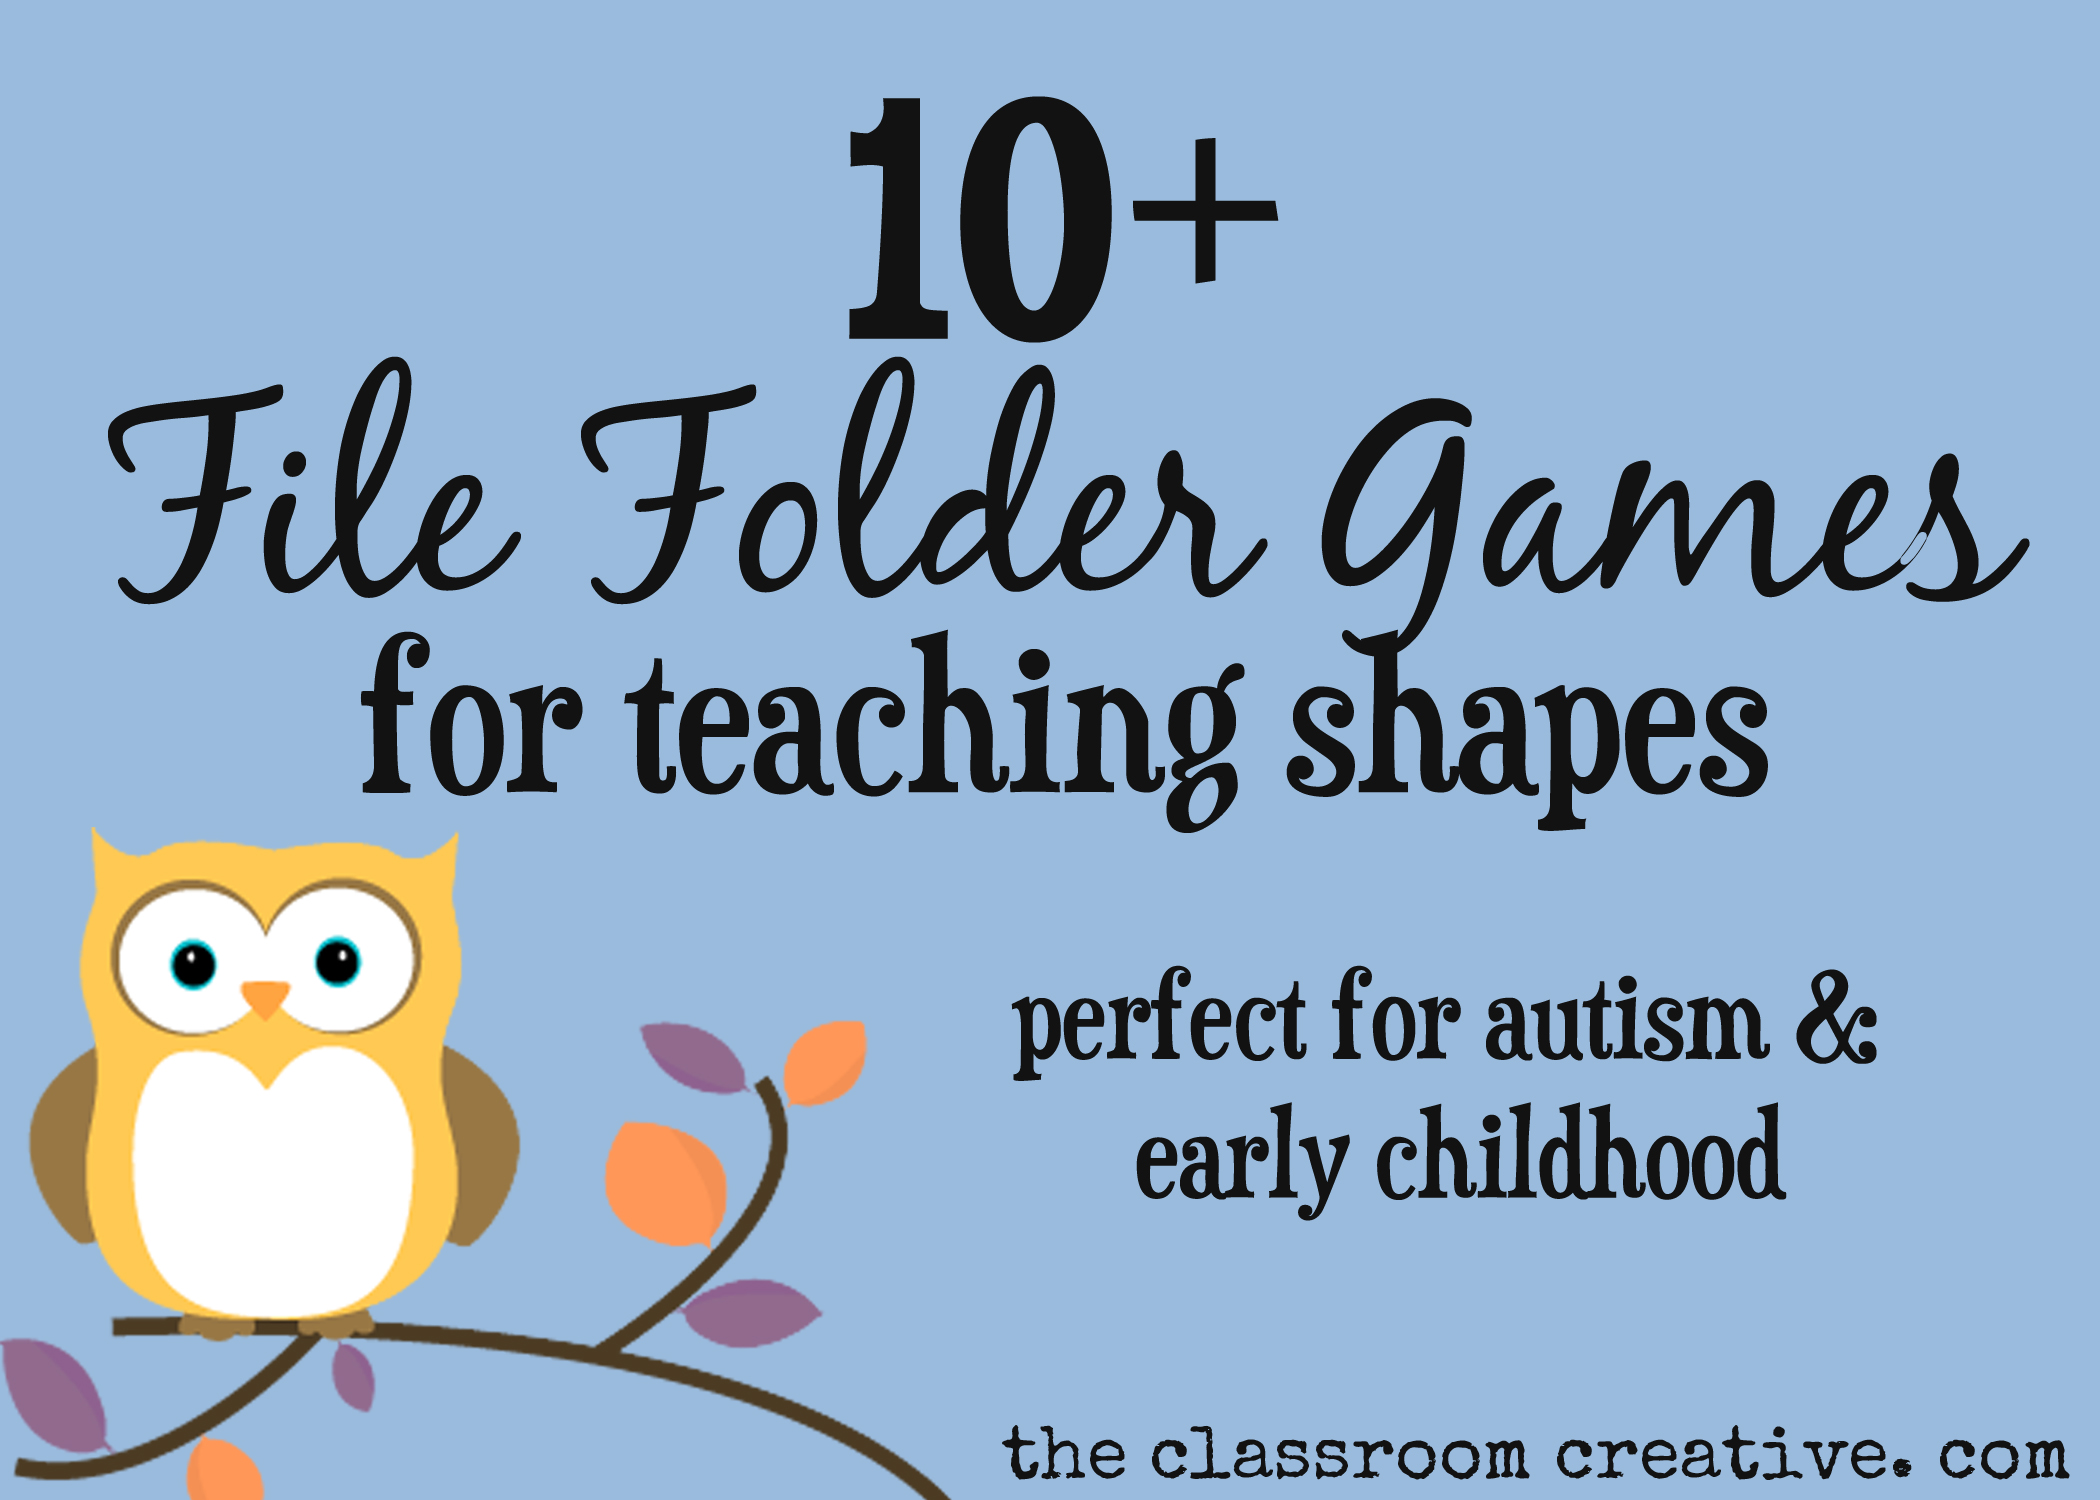 File Folder Games for Teaching Shapes